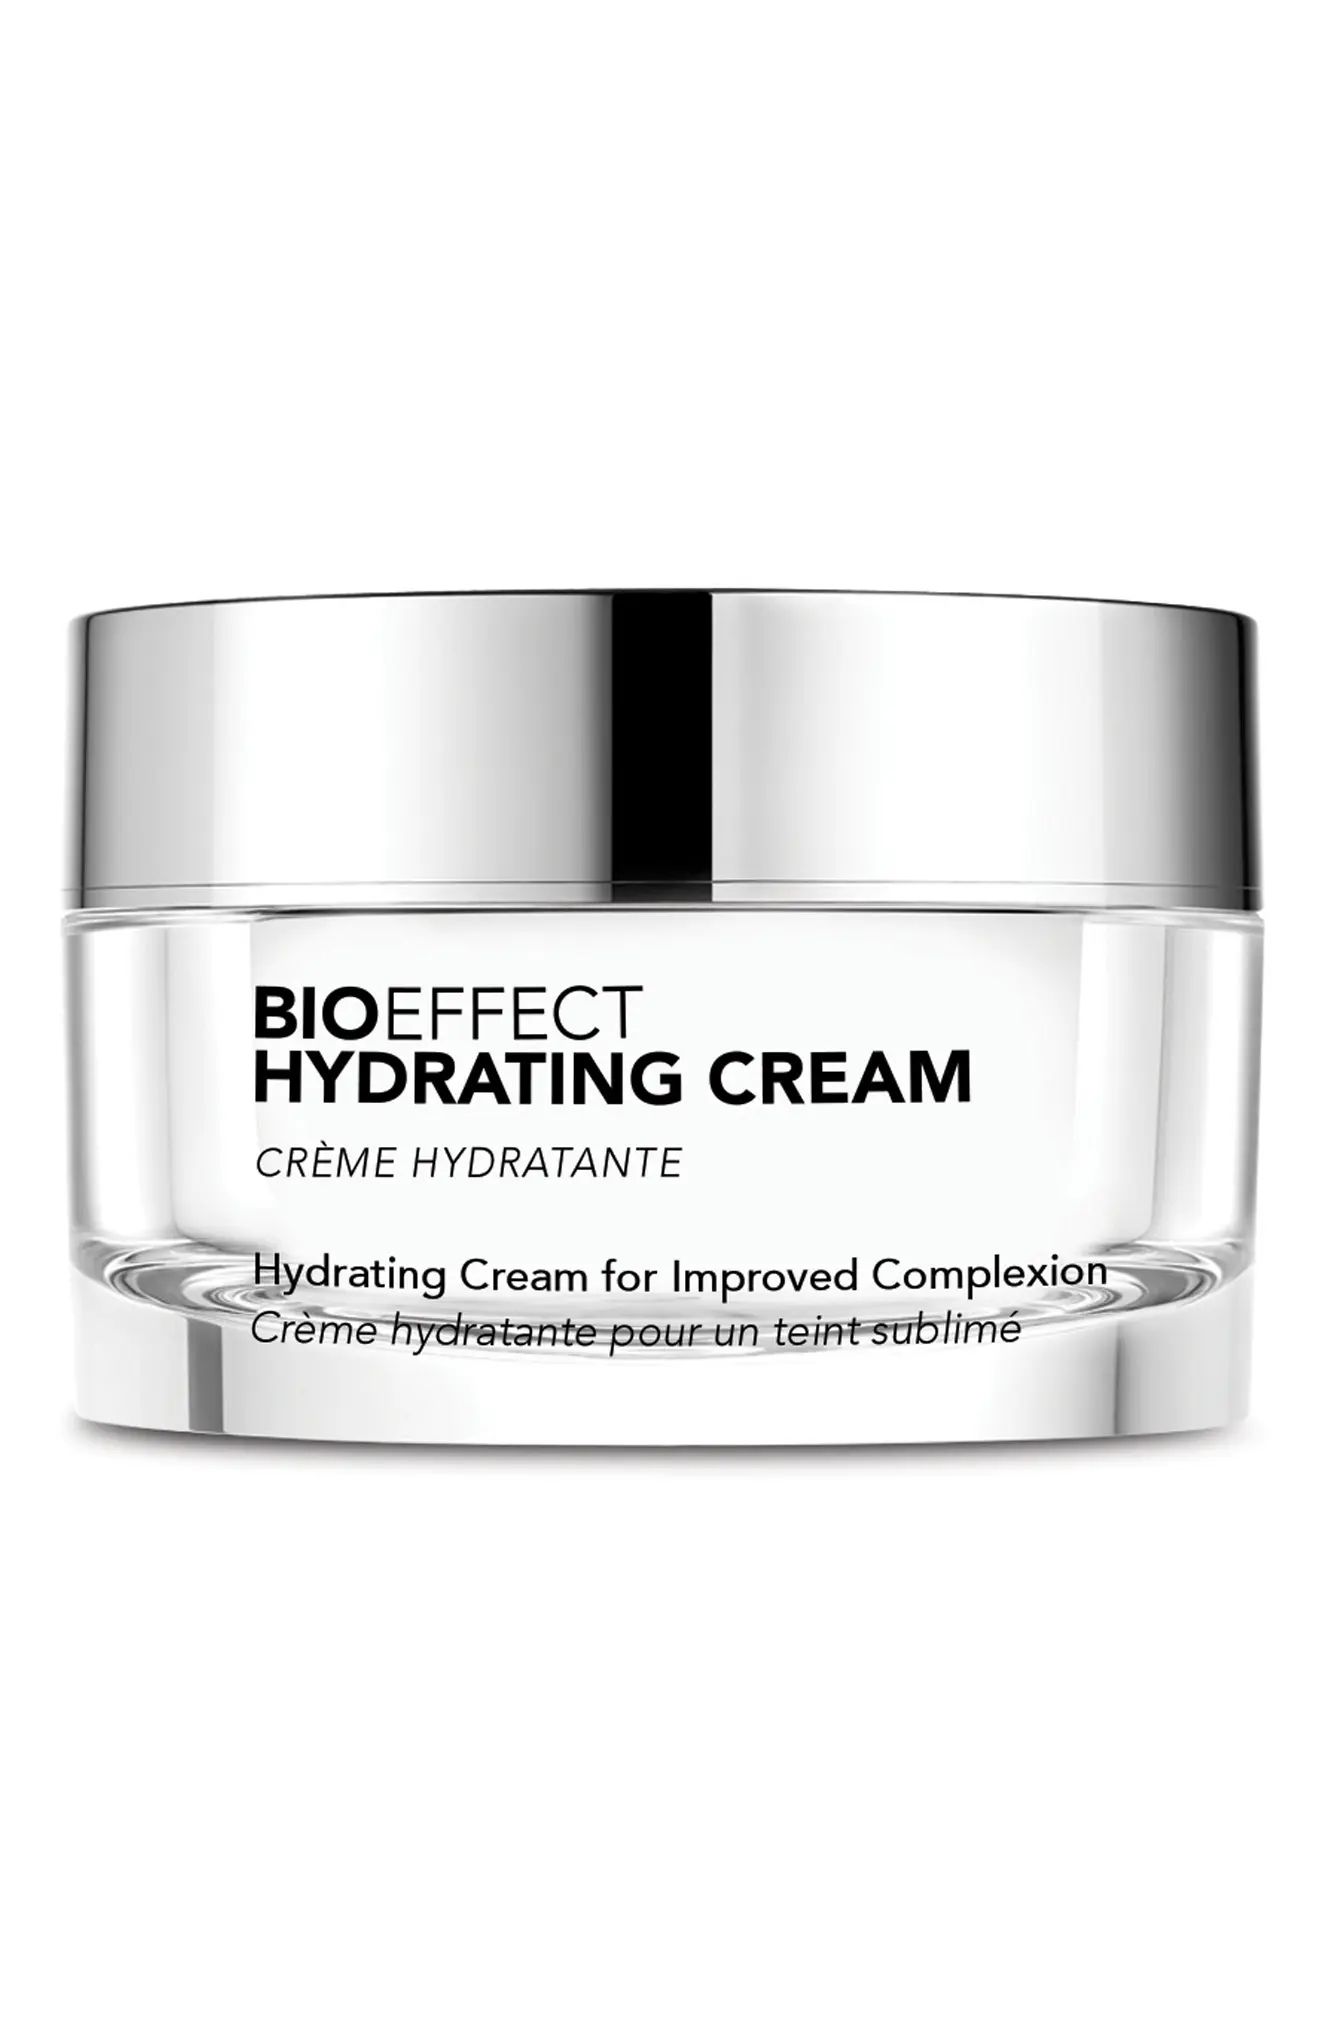 Bioeffect Hydrating Cream | Nordstrom